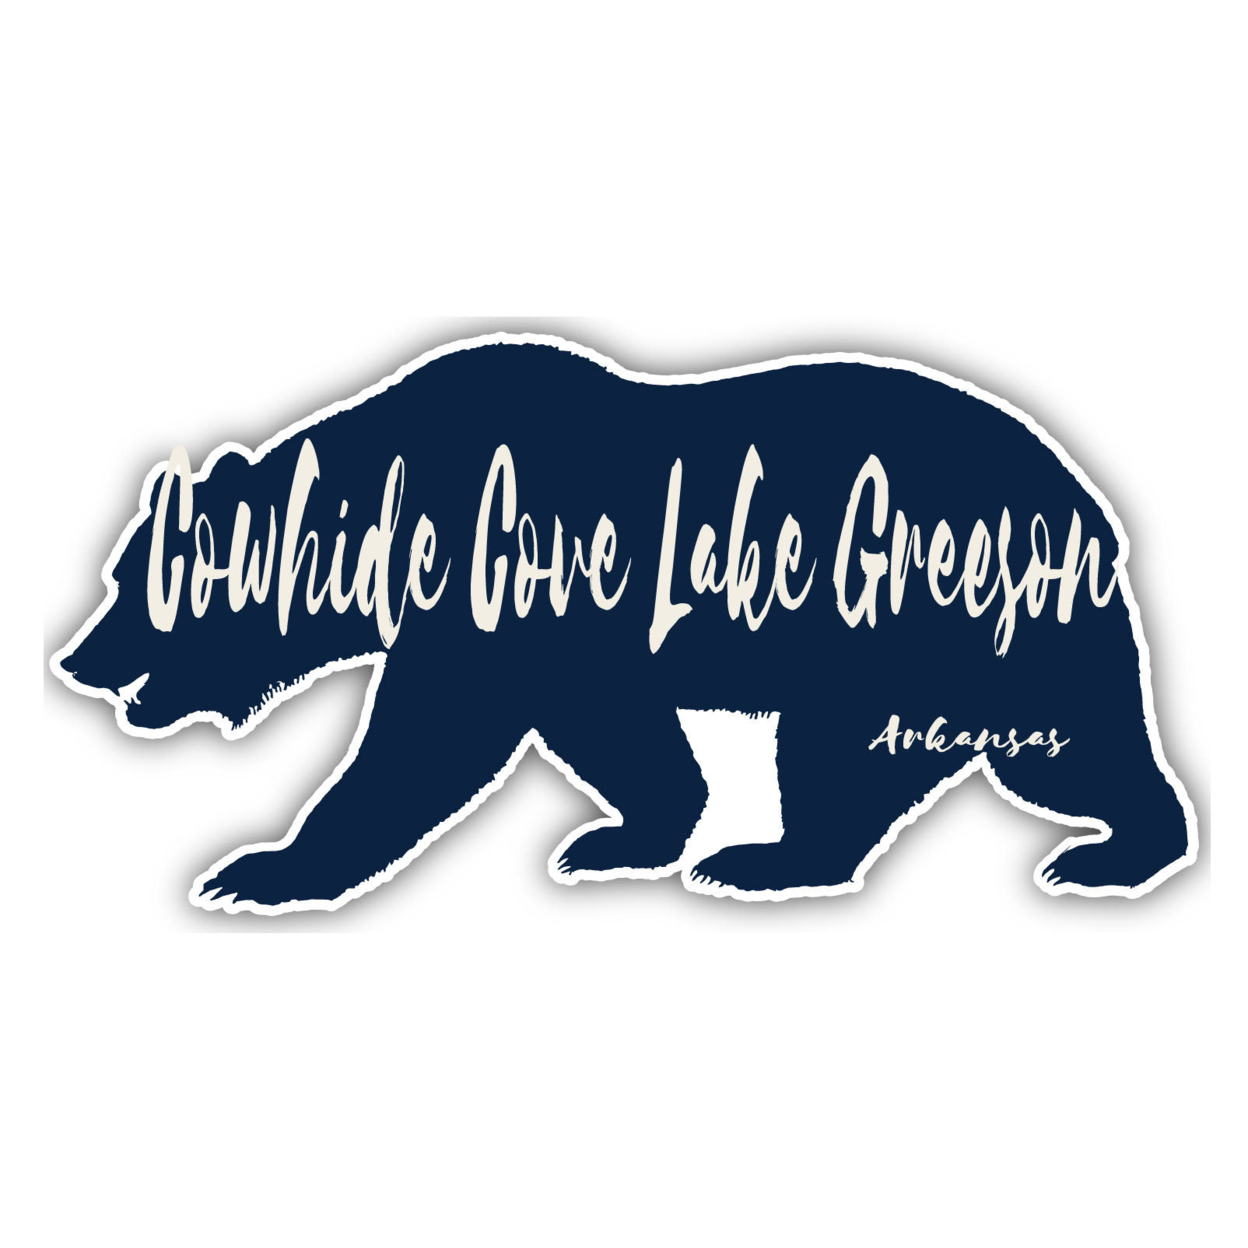 Cowhide Cove Lake Greeson Arkansas Souvenir Decorative Stickers (Choose Theme And Size) - 4-Pack, 6-Inch, Bear